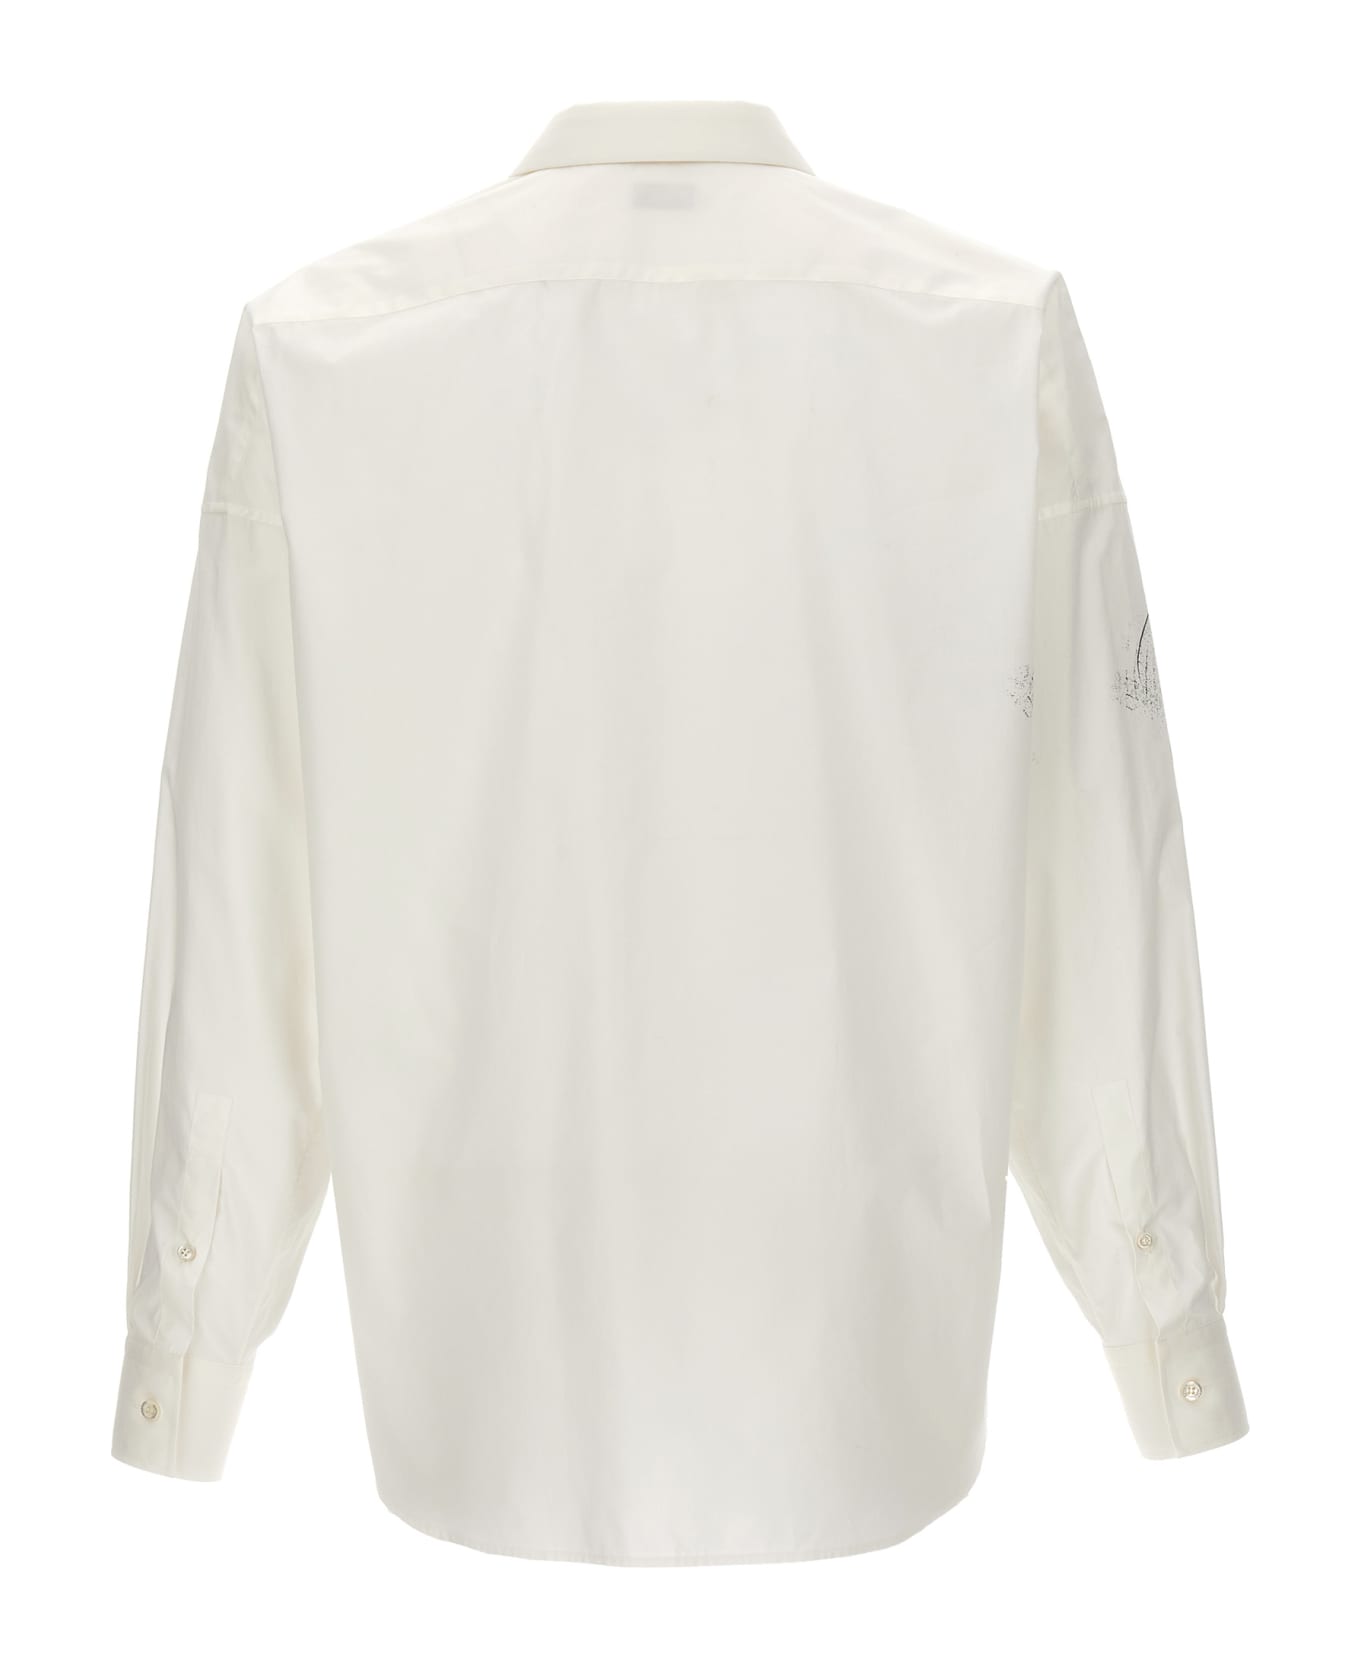 Alexander McQueen Printed Shirt - White/Black シャツ